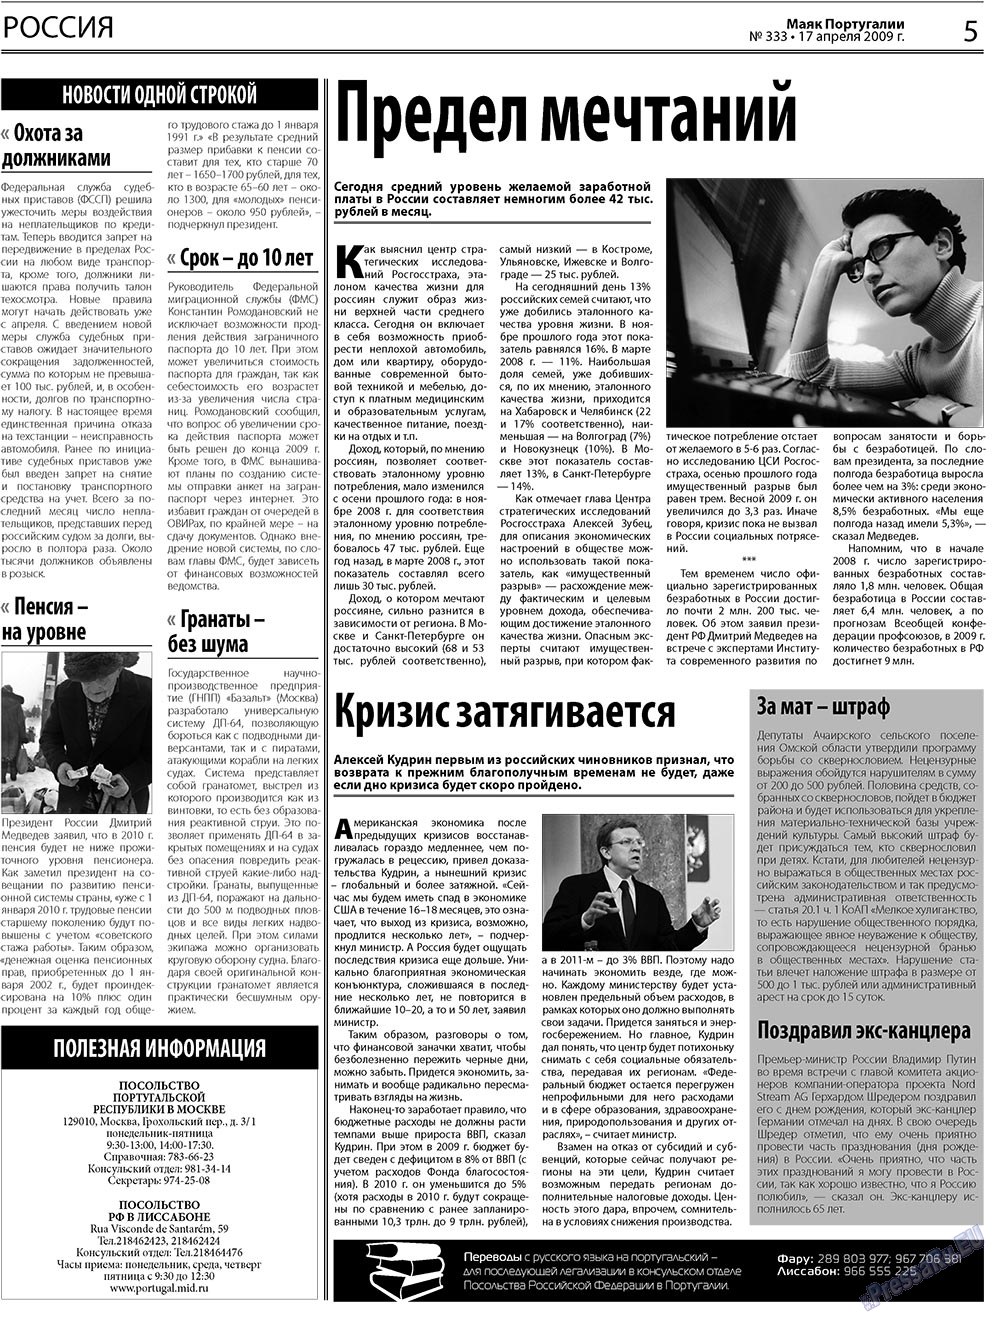 Маяк Португалии, газета. 2009 №16 стр.5